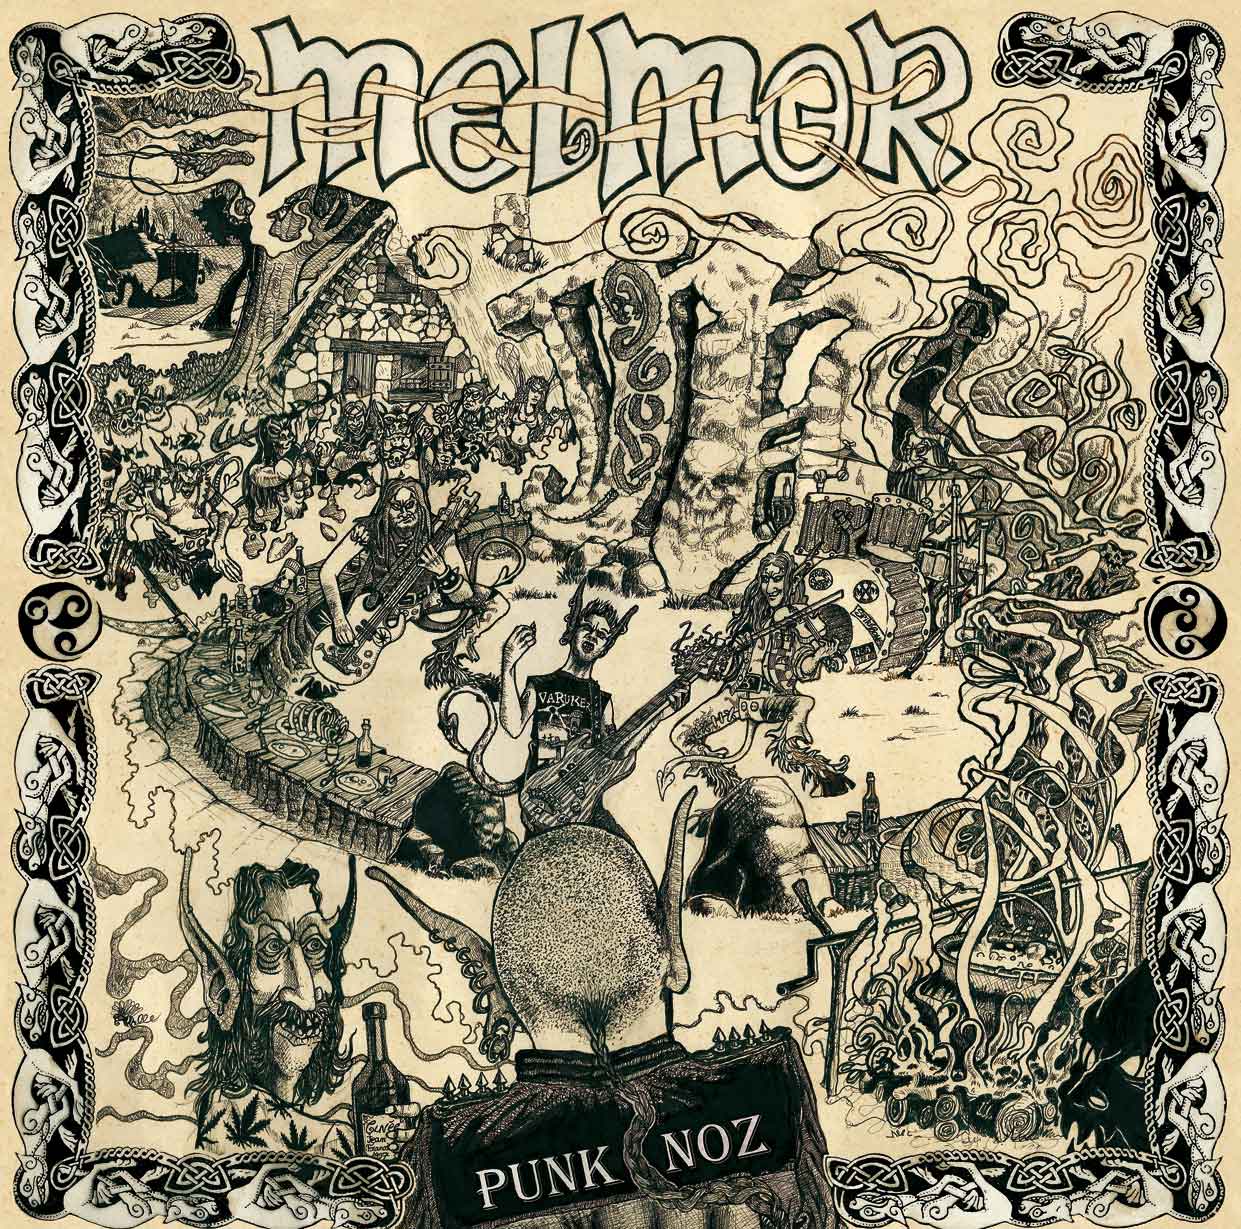 MELMOR "Punk noz" - LP